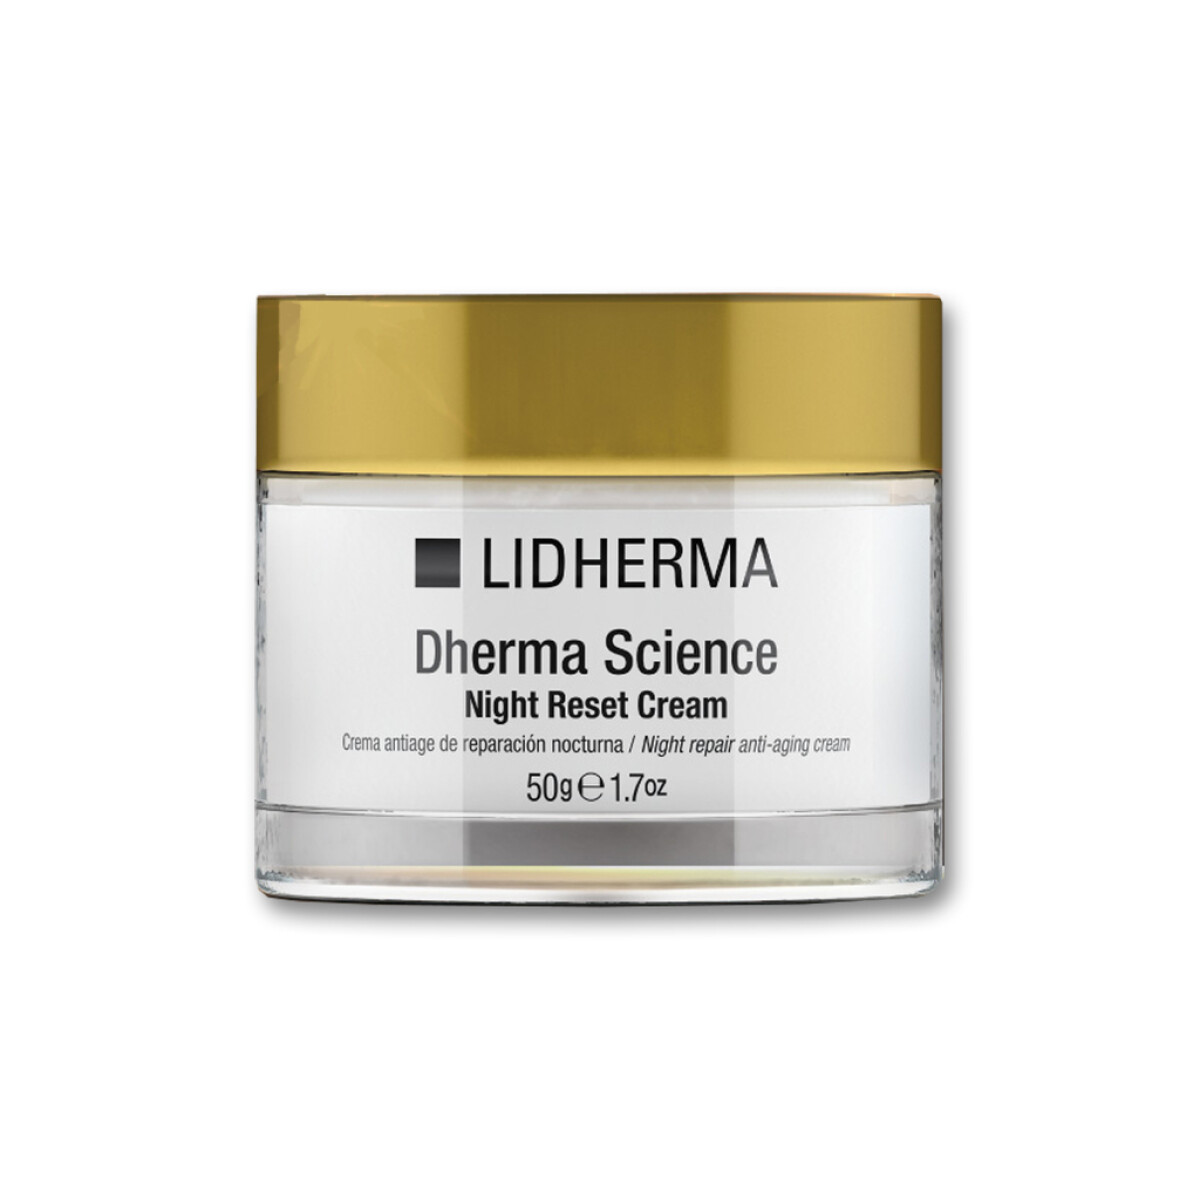 Dherma Science night reset cream - Lidherma 